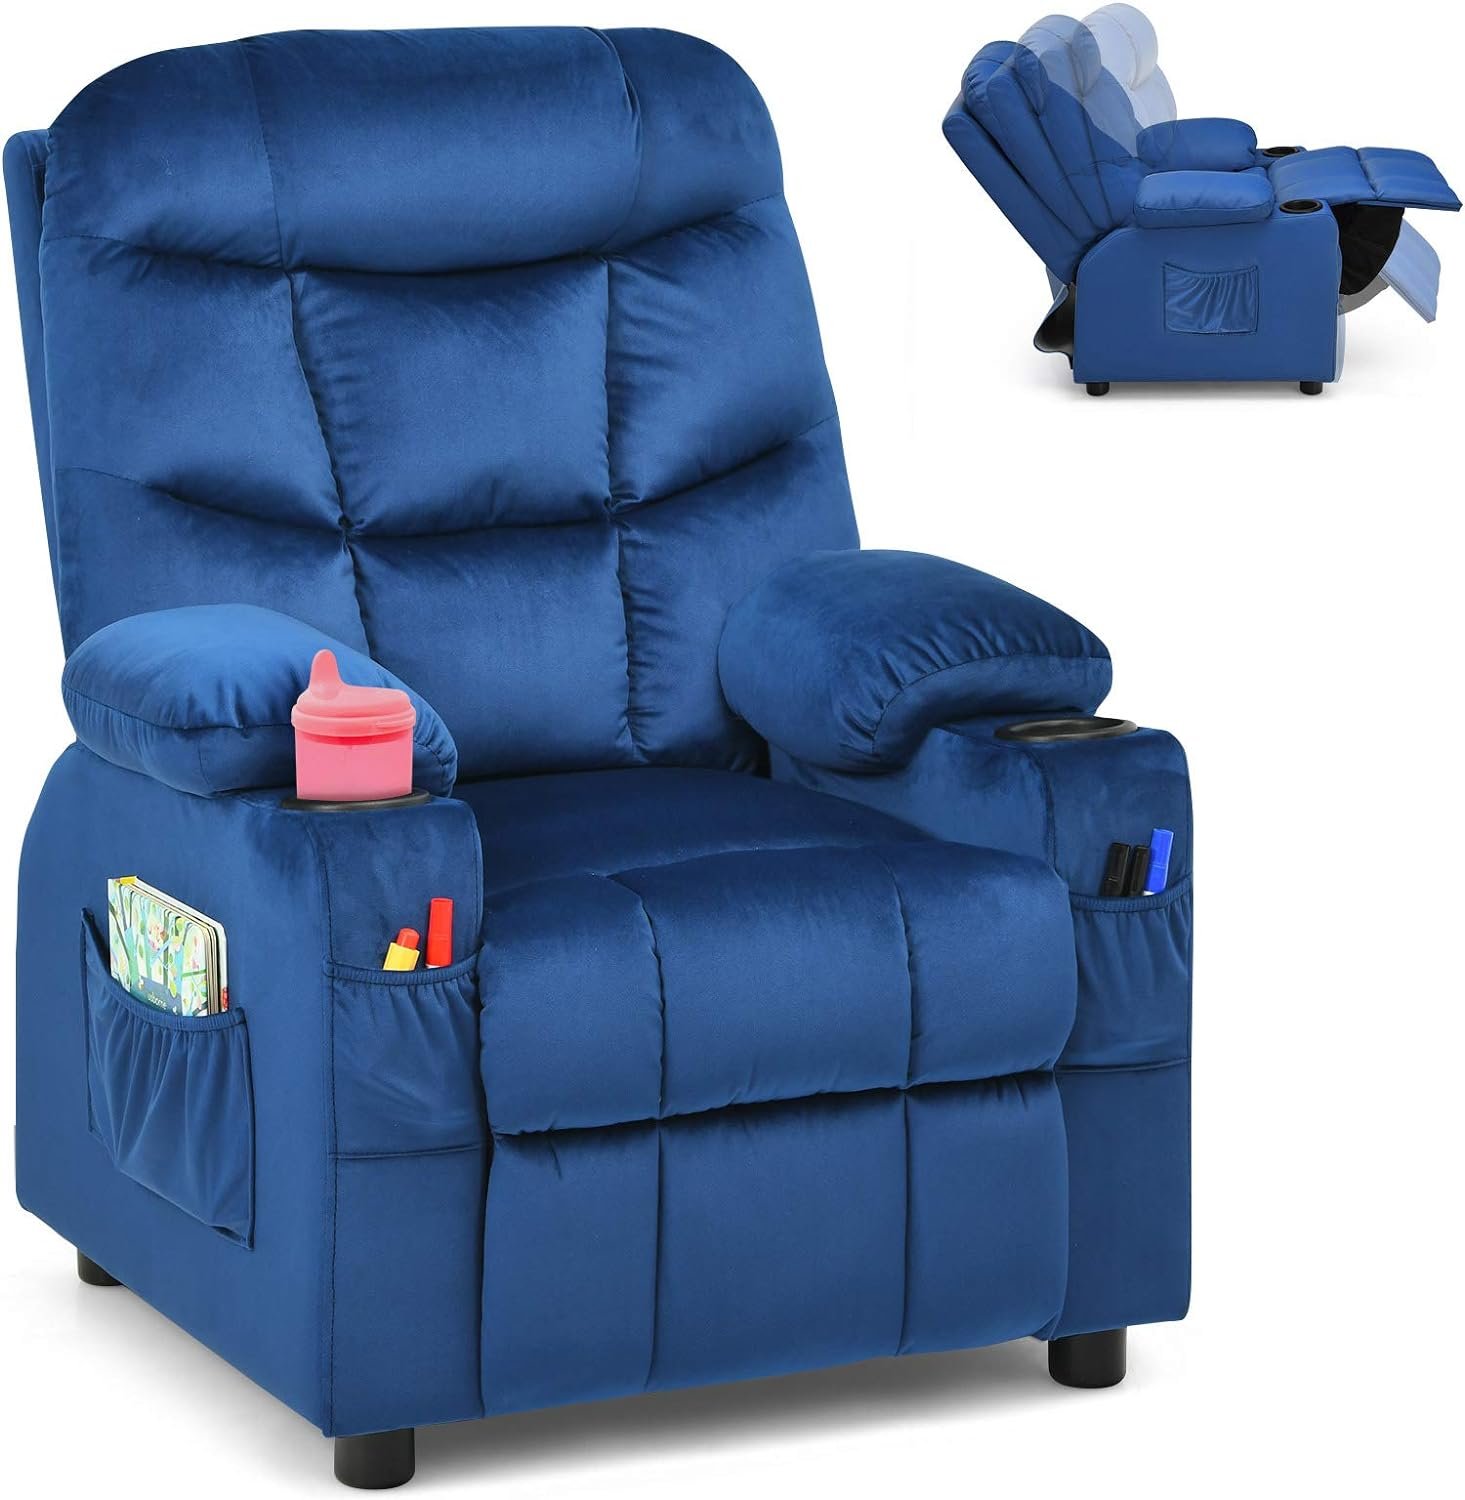 Costzon Kids Recliner Chair with Cup Holder, Adjustable Velvet Lounge Chair w/Footrest  Side Pockets for Children Boys Girls Room, Ergonomic Toddler Furniture Sofa, Kids Recliner (Blue)